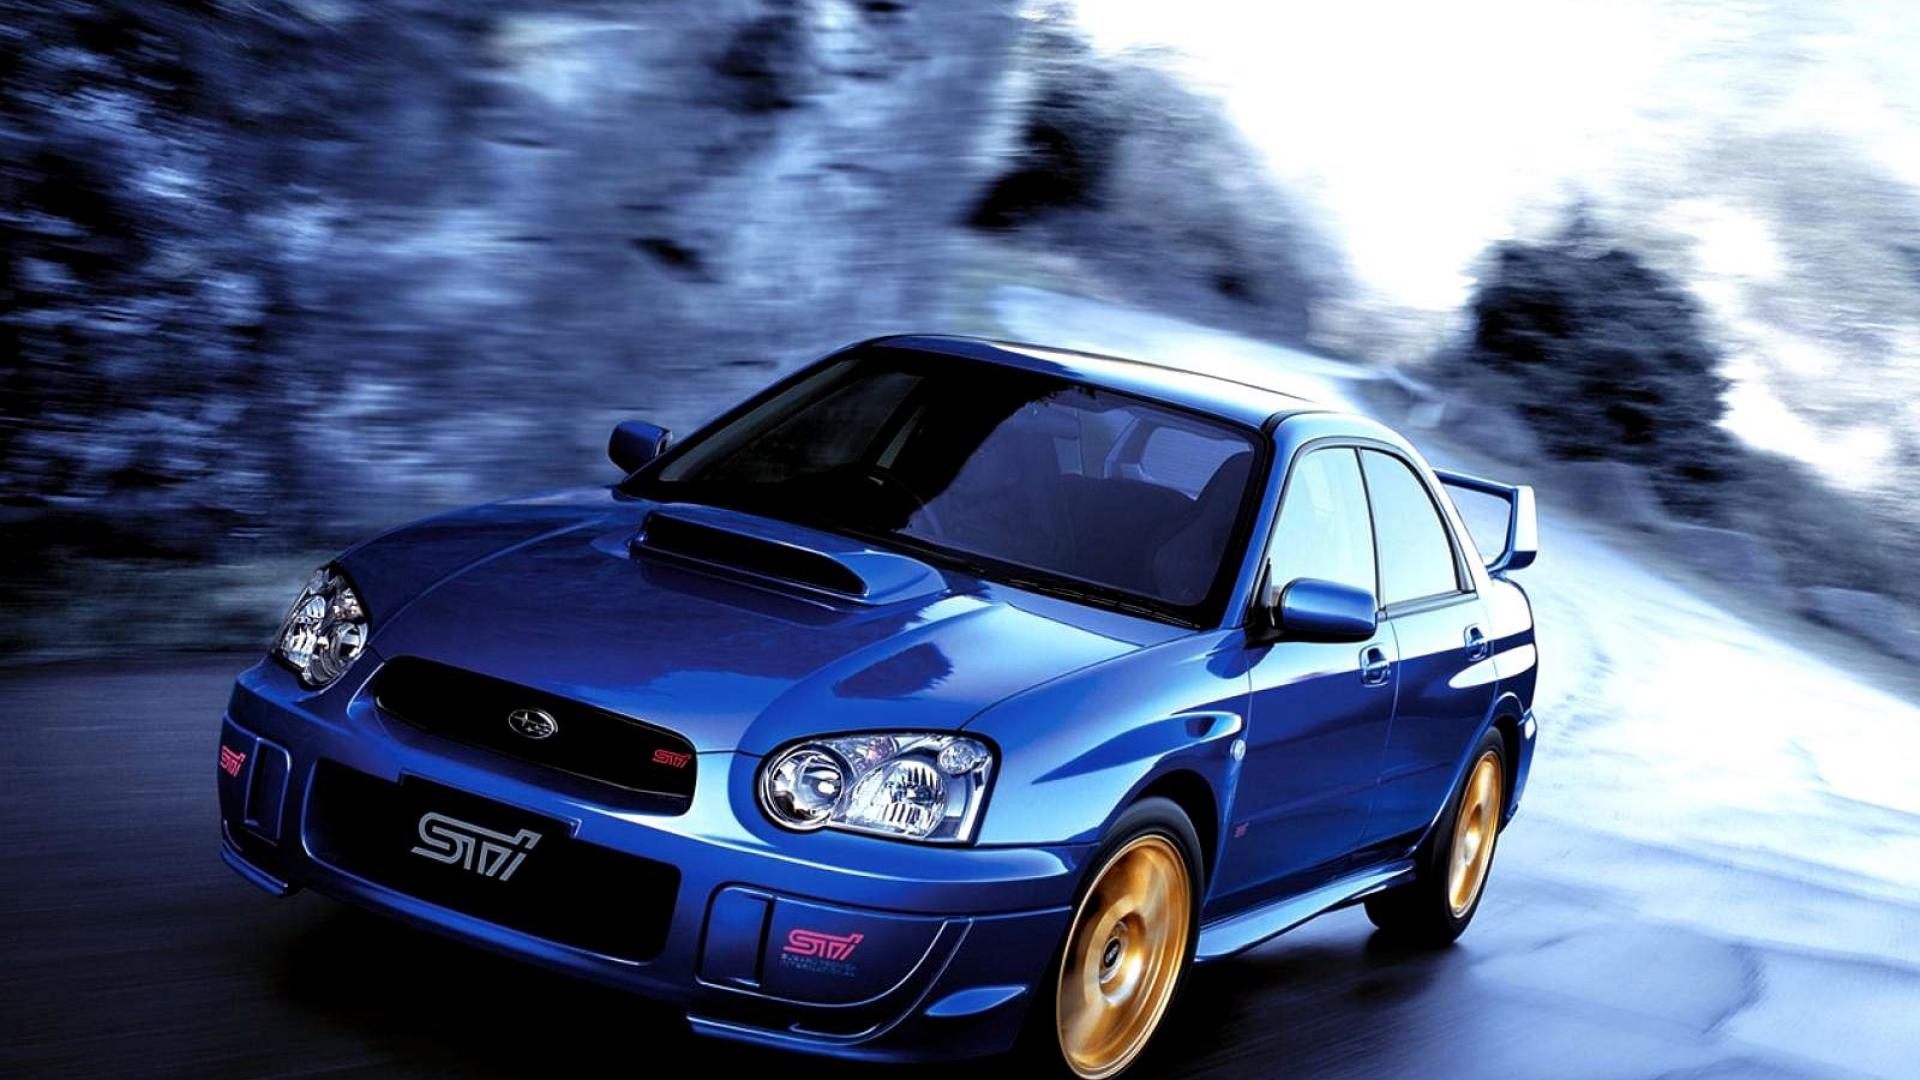 Subaru Impreza Car HD Wallpaper 1080p - 9to5 Car Wallpapers